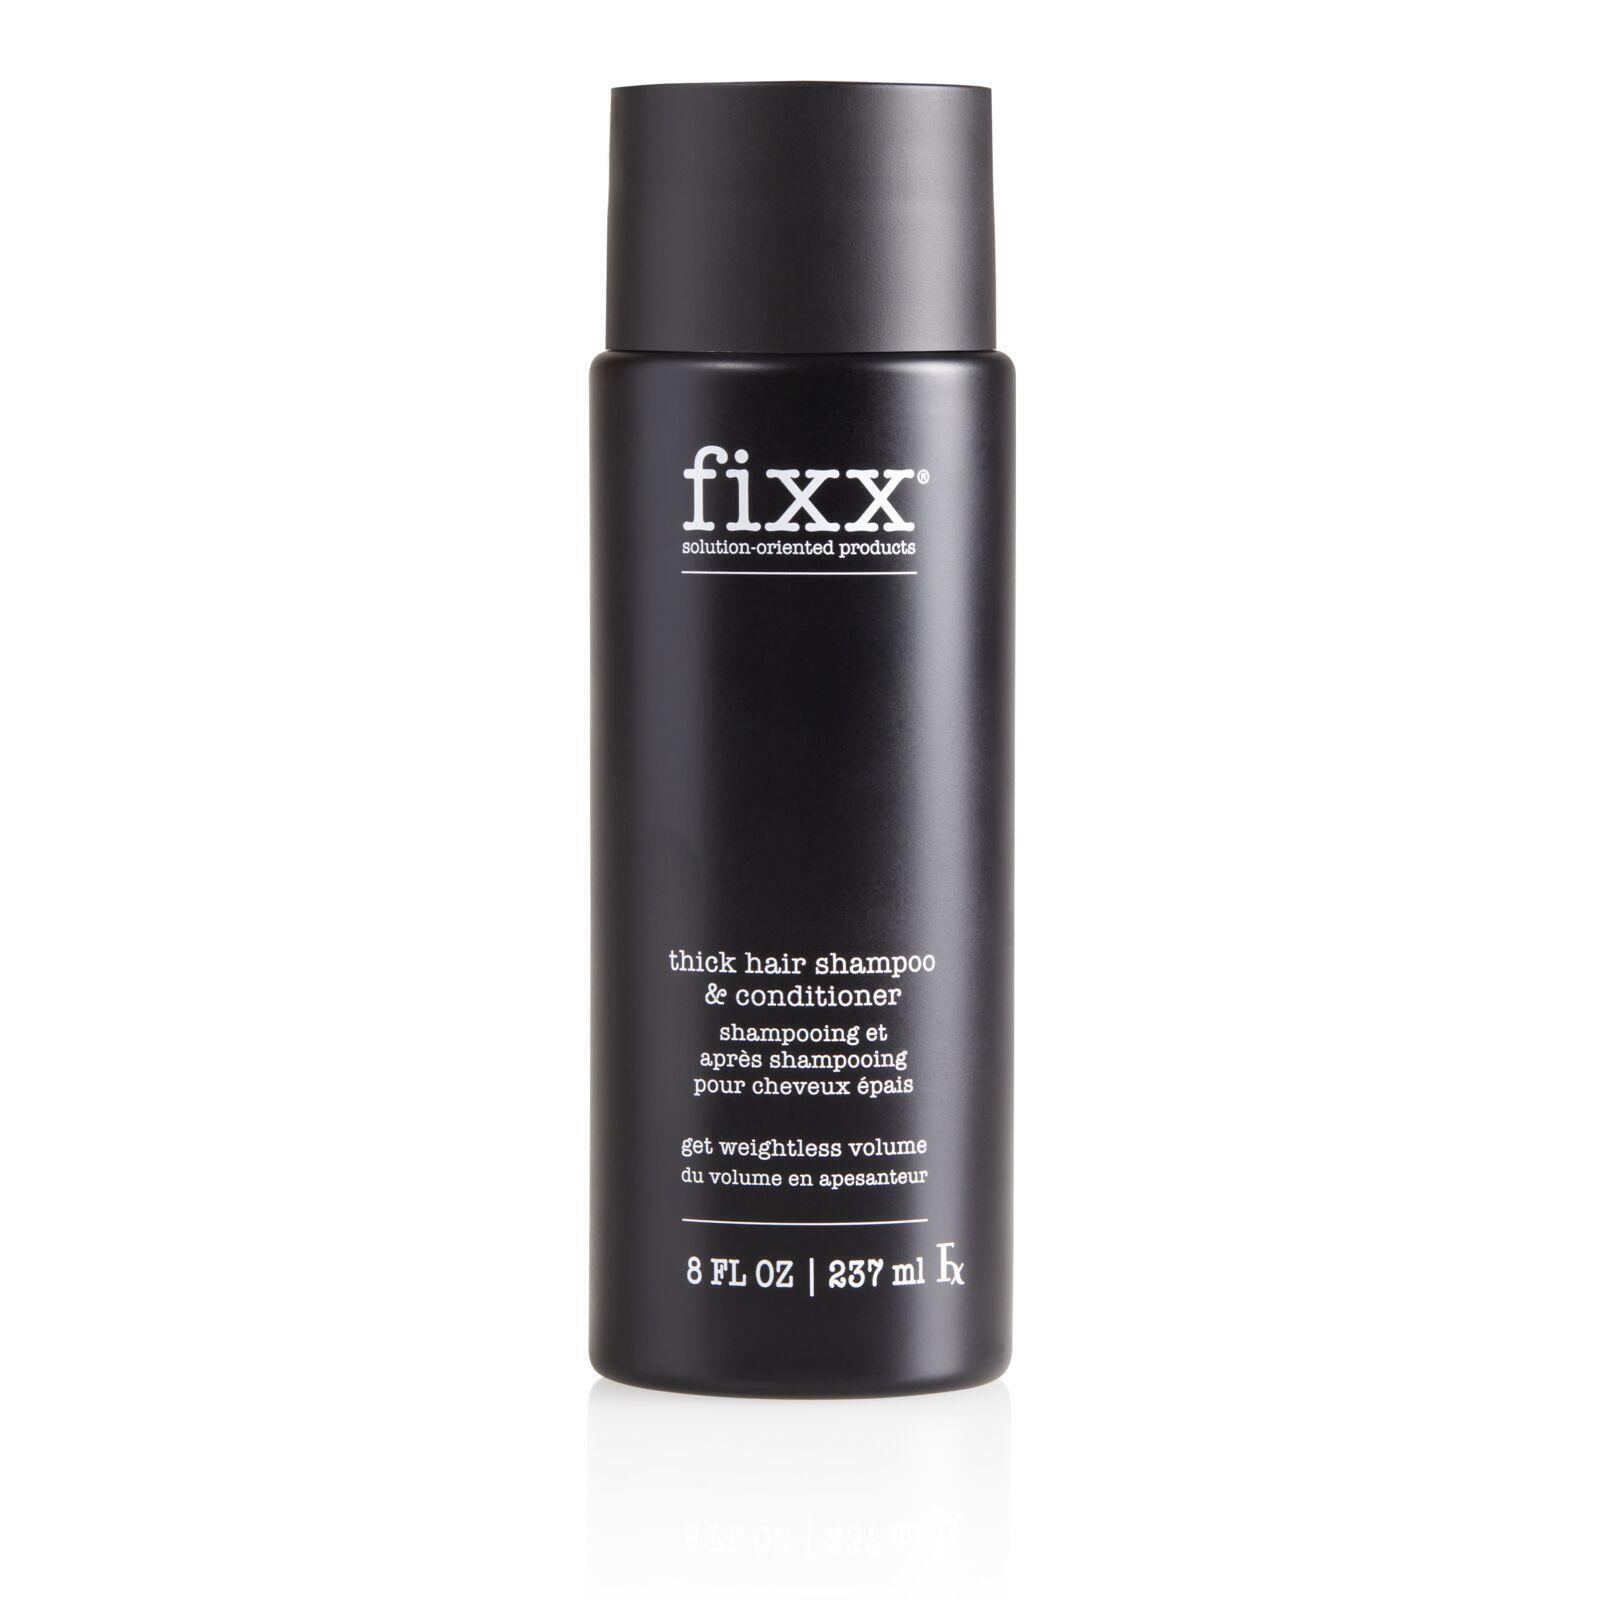 Fixx™ Thick Hair Shampoo & Conditioner